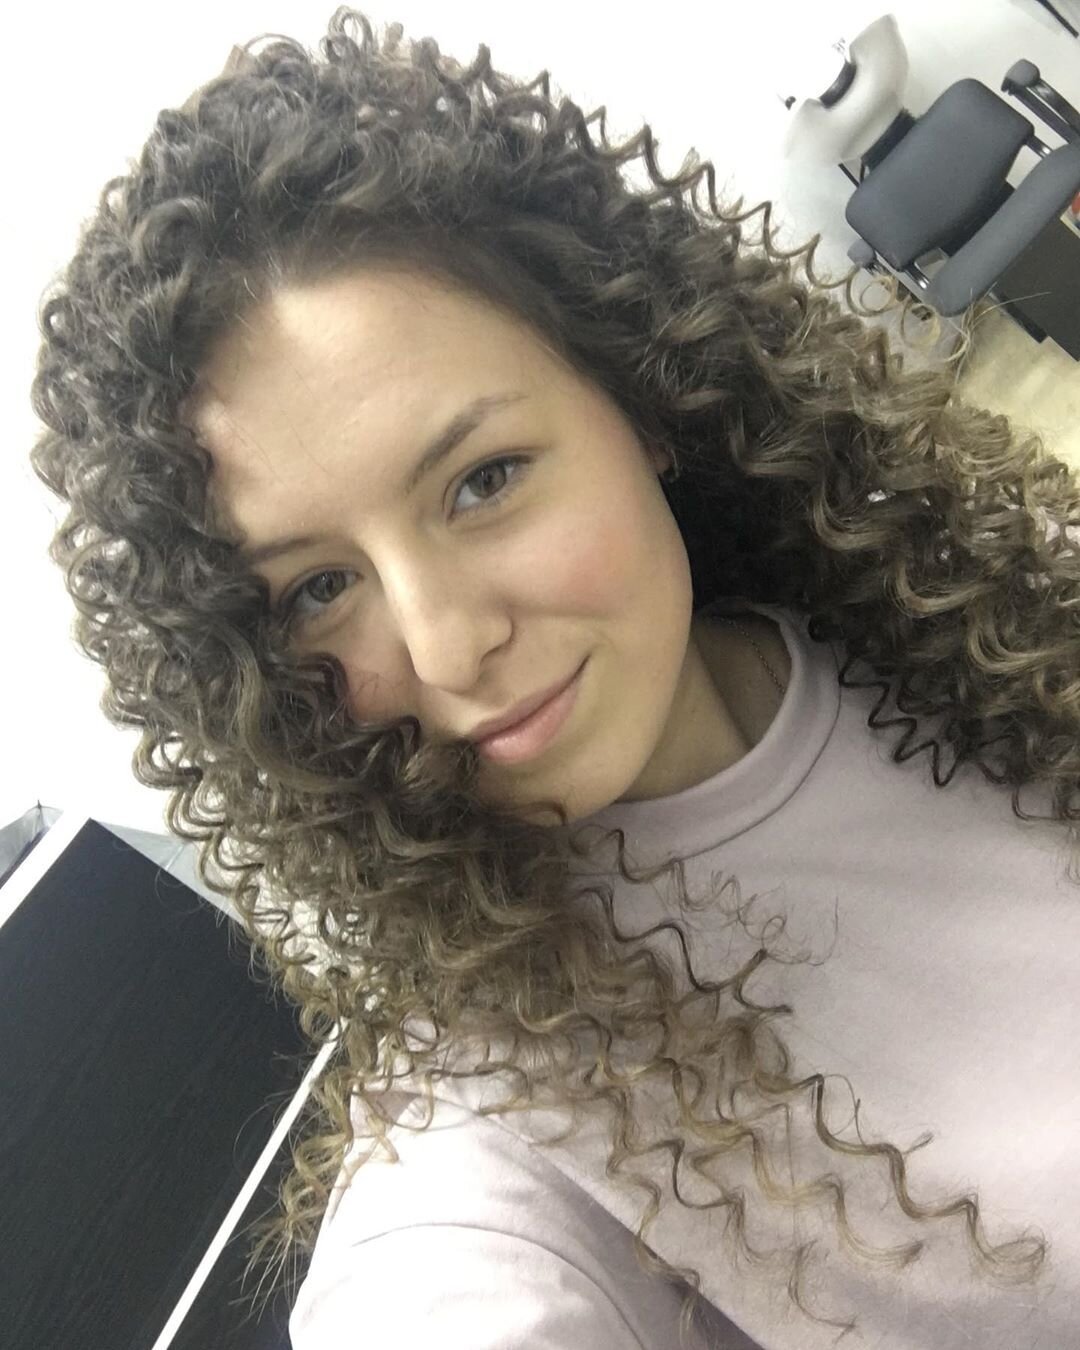 Curly hair latina 1